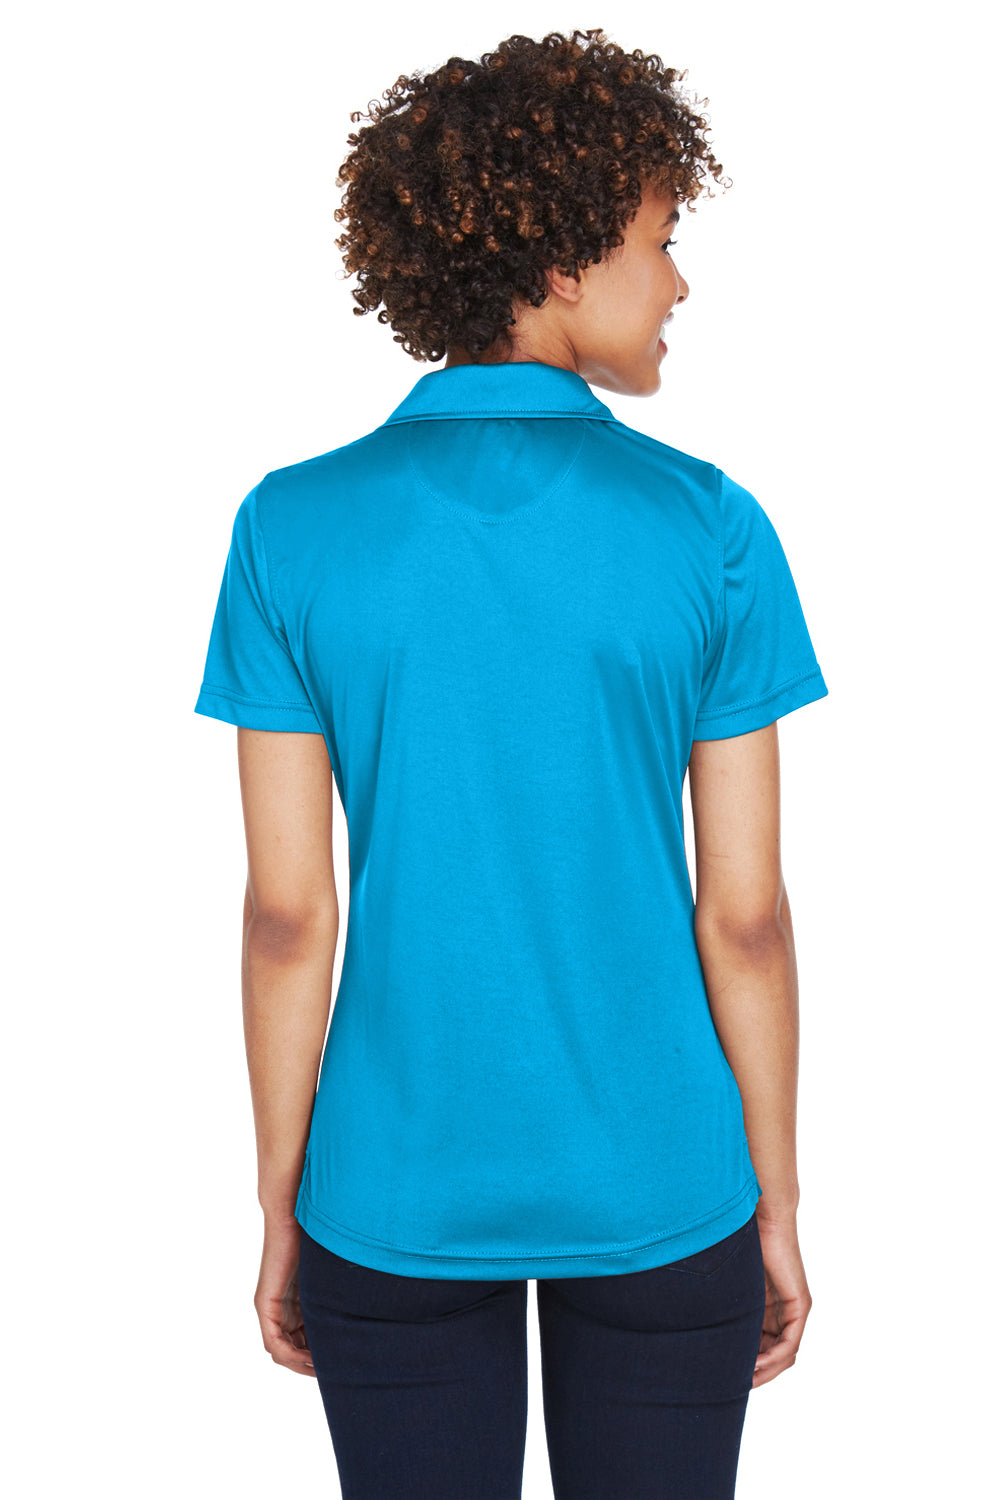 UltraClub 8425L Womens Cool & Dry Performance Moisture Wicking Short Sleeve Polo Shirt Sapphire Blue Back